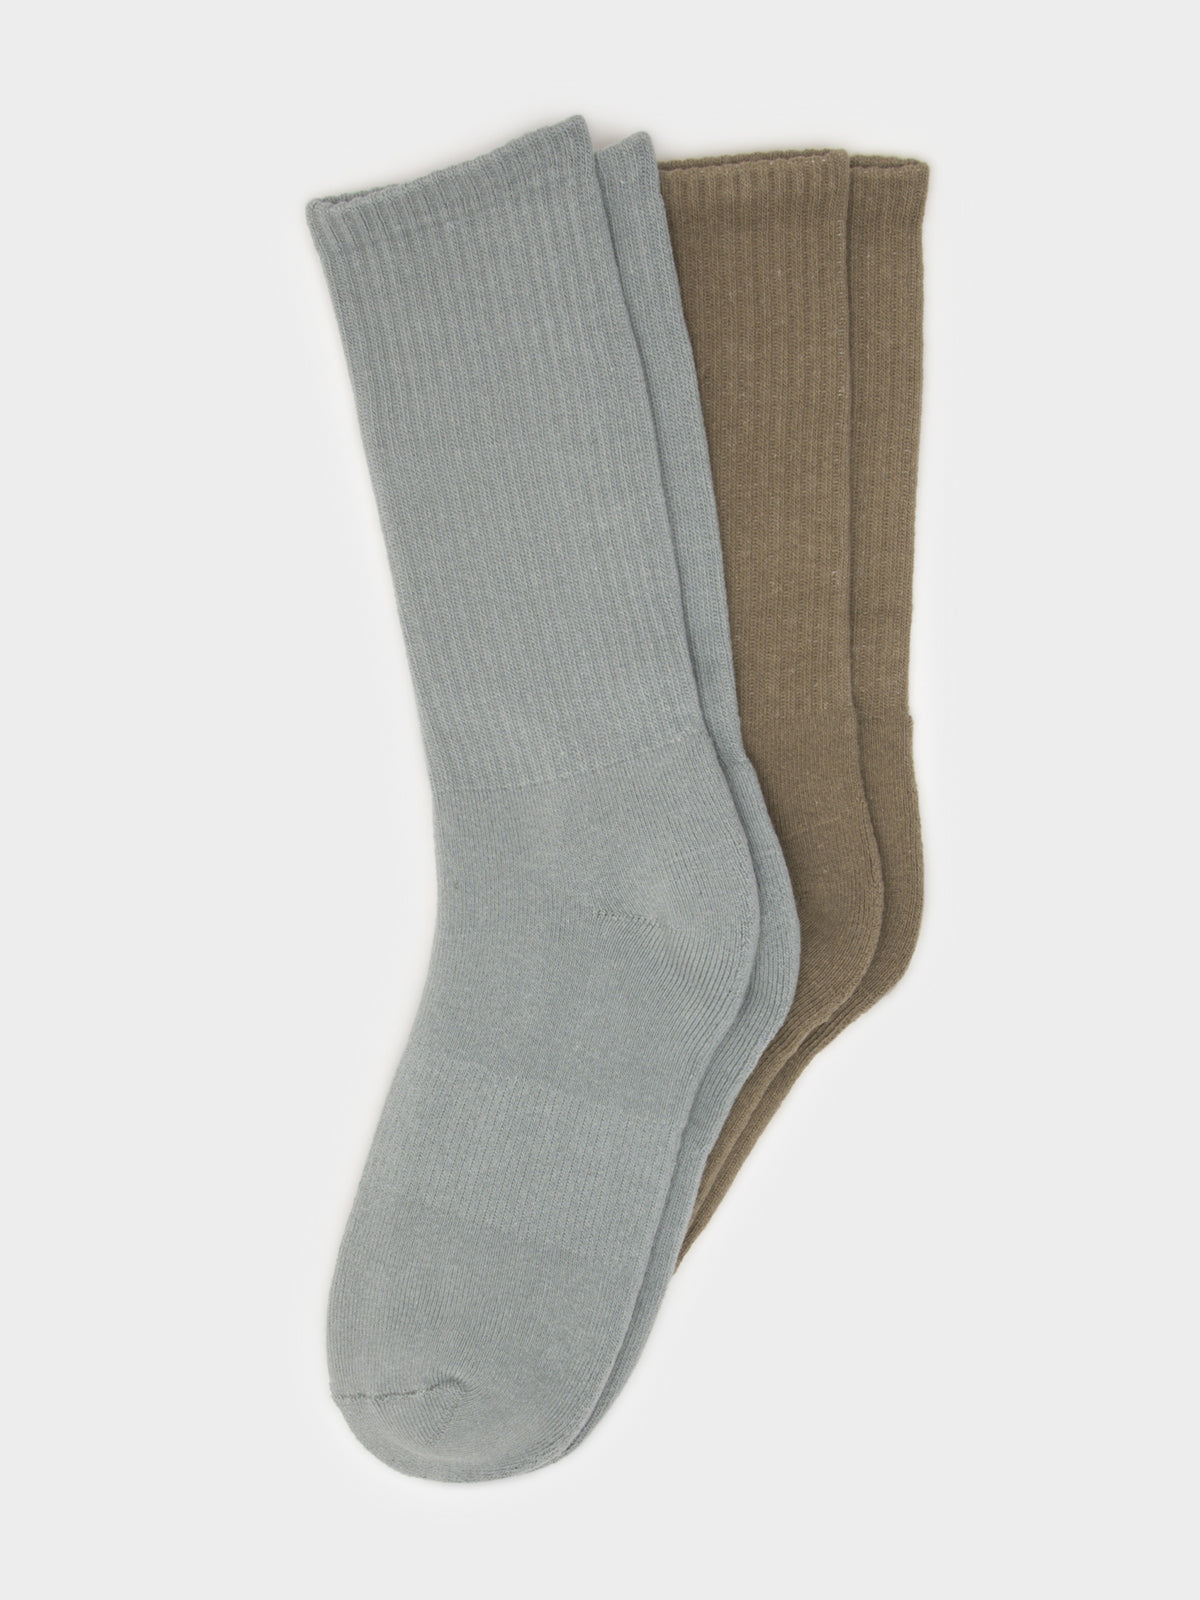 2 Pairs of Classic Socks in Stone Thistle &amp; Fog